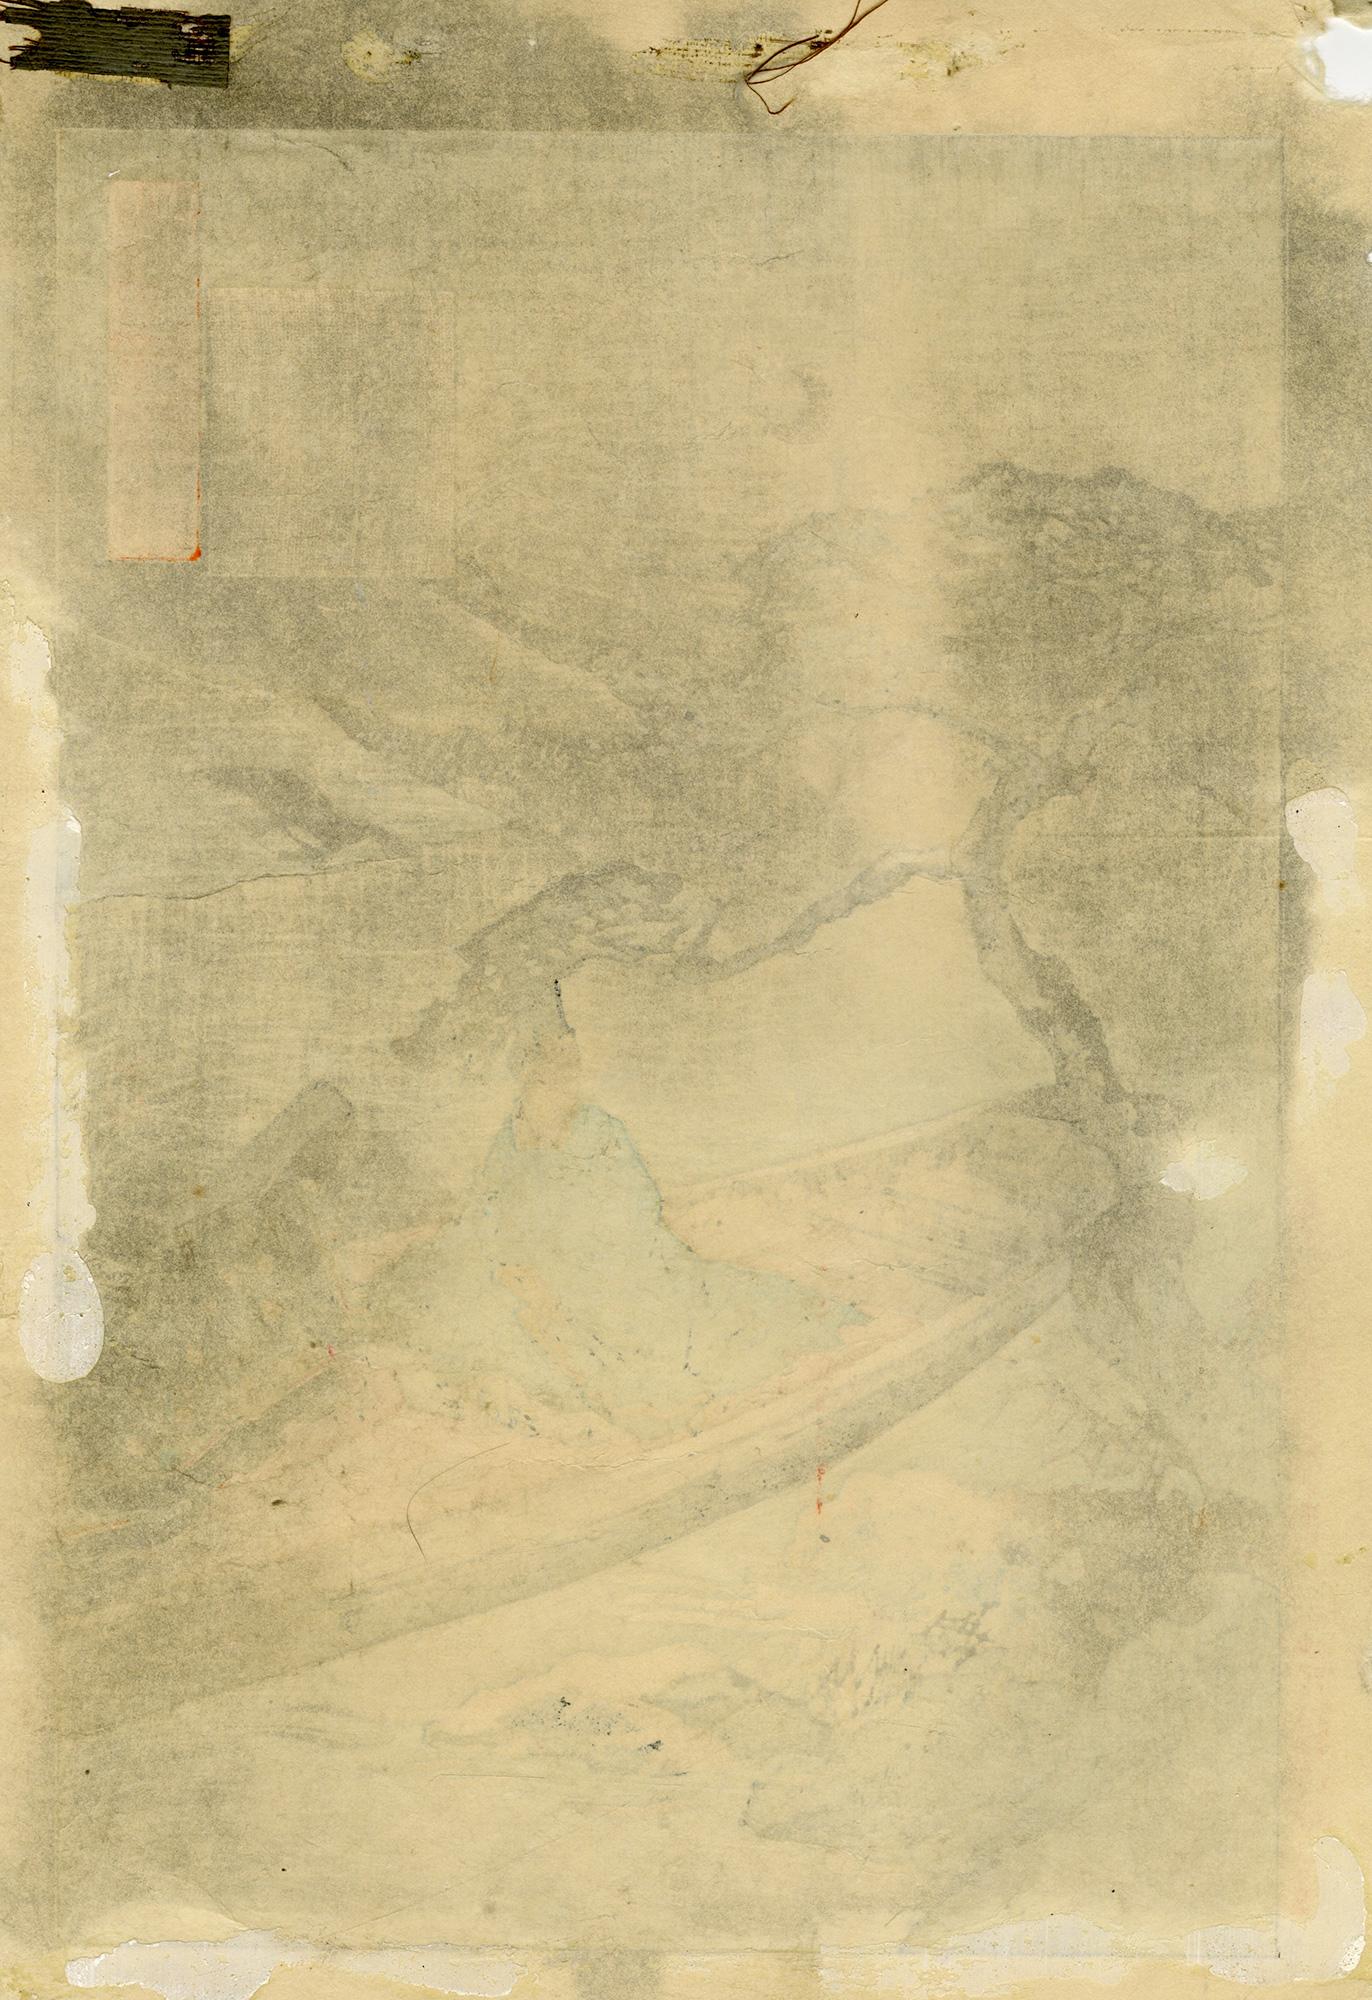 Courtiers under a wisteria draped pine tree - Print by Ogata Gekko